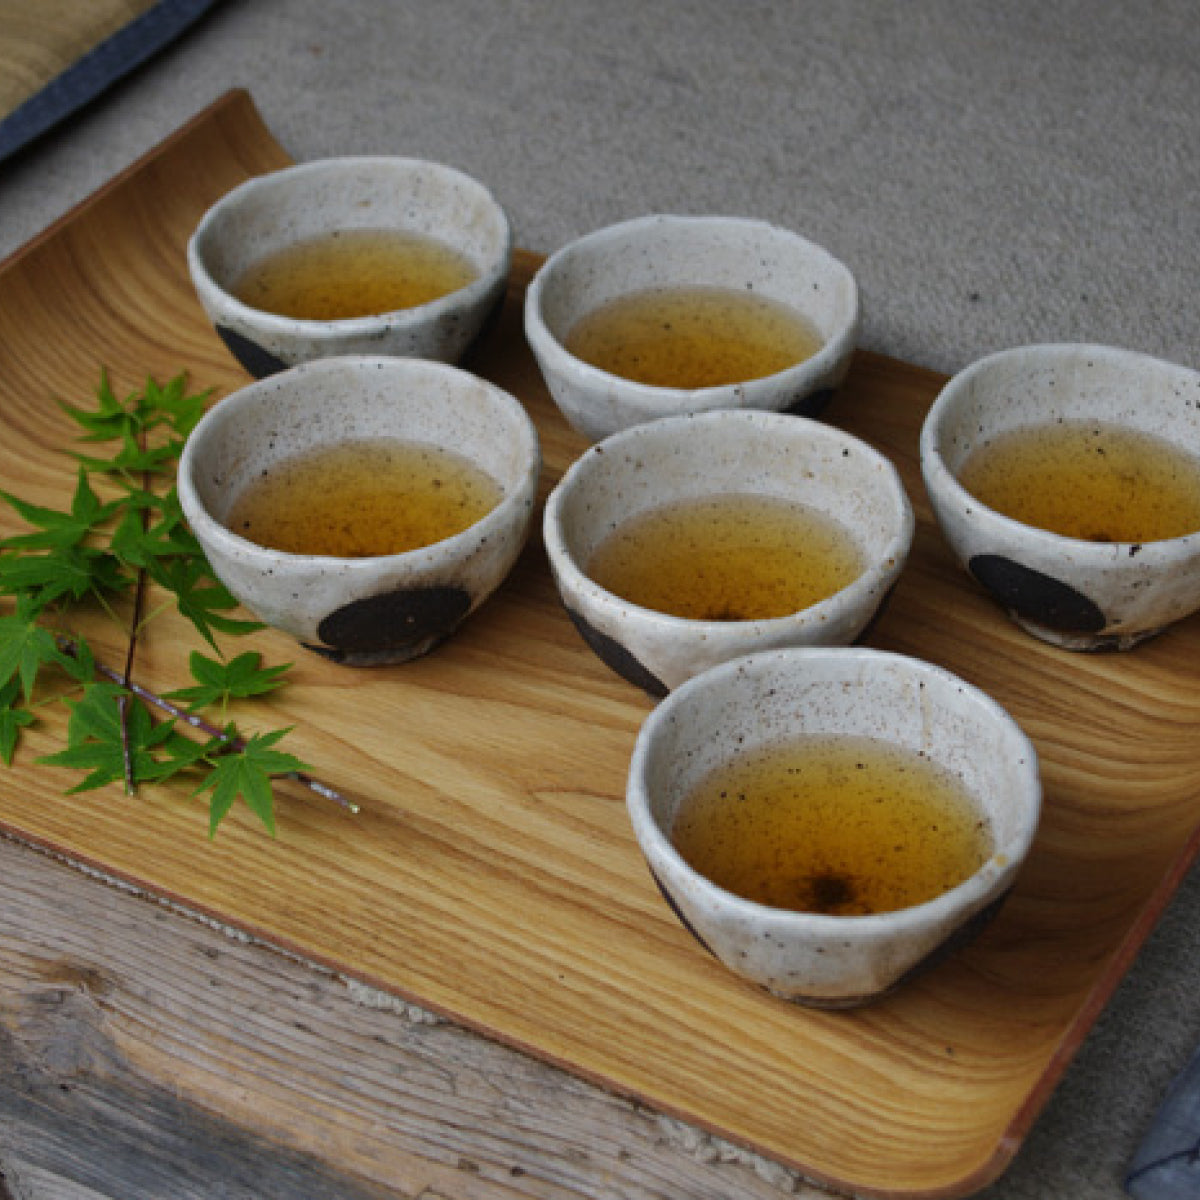 Roasted Green Tea "Hojicha" 80g/2.82oz x 2pcs